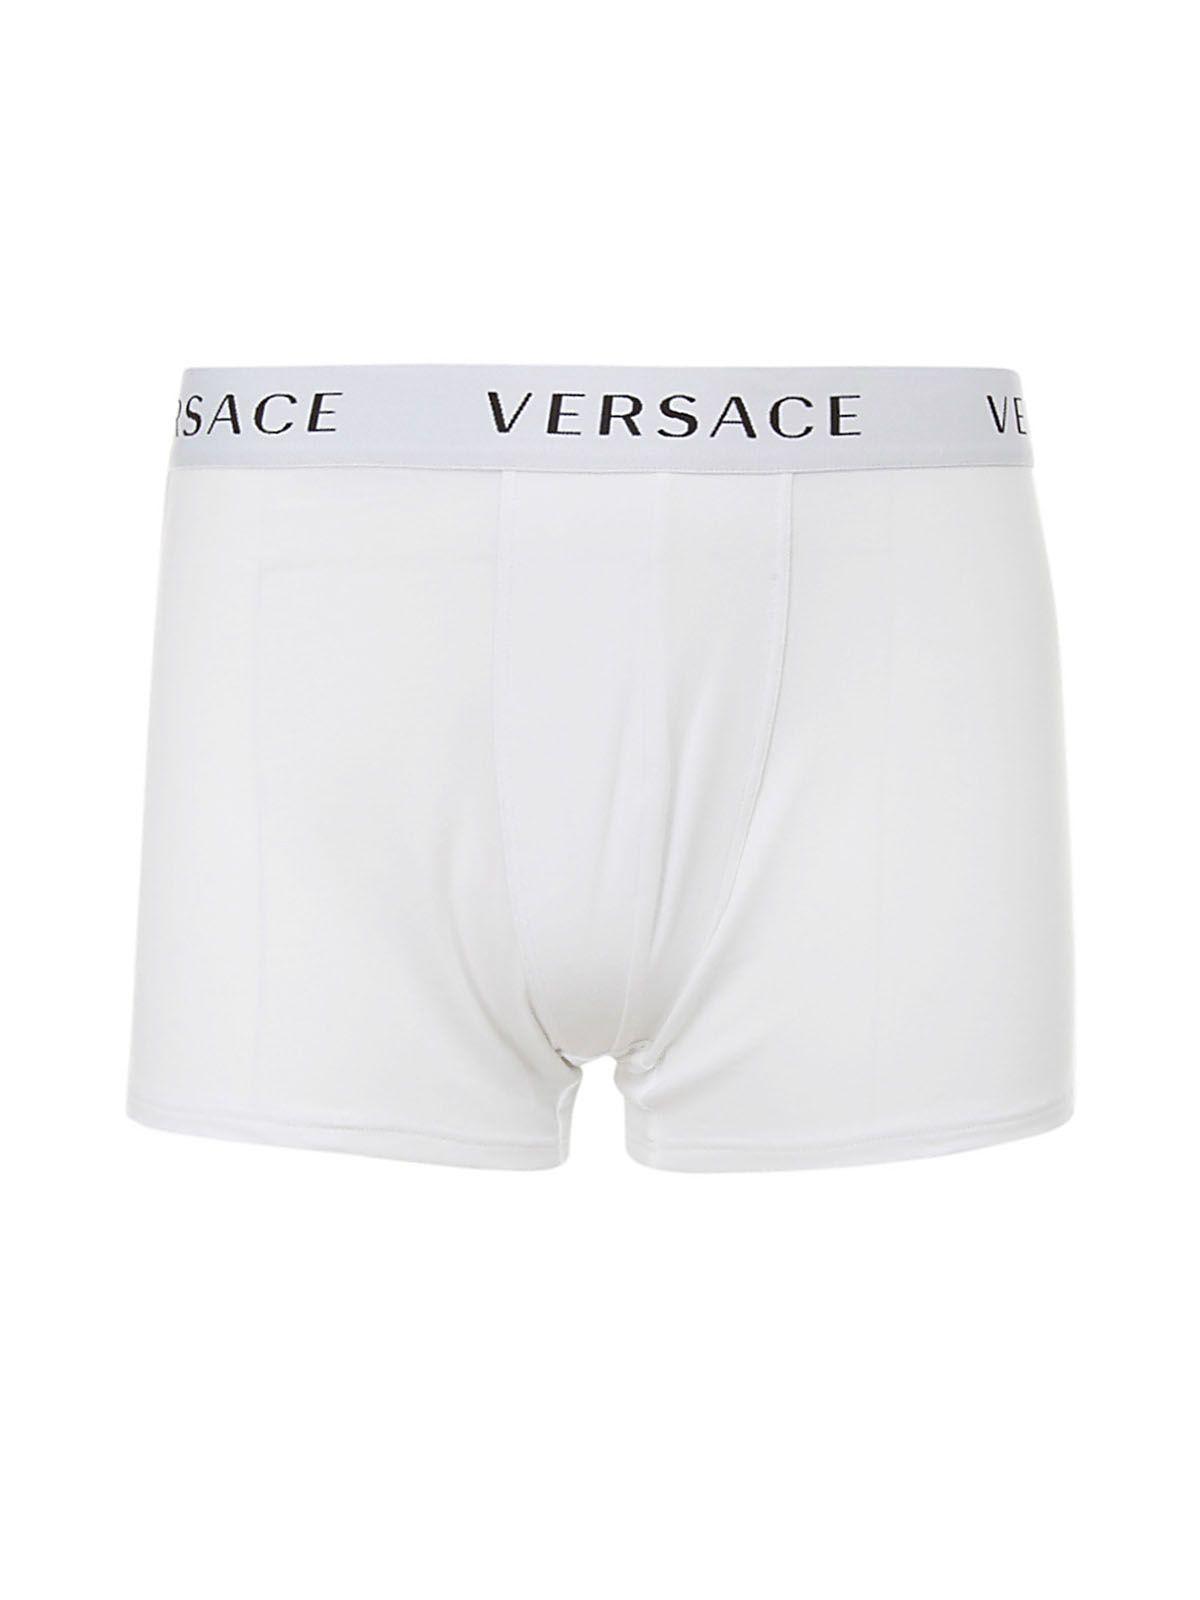 Versace Mens Underwear & Swimwear in Black Mens Underwear Versace Underwear for Men White Save 62% 